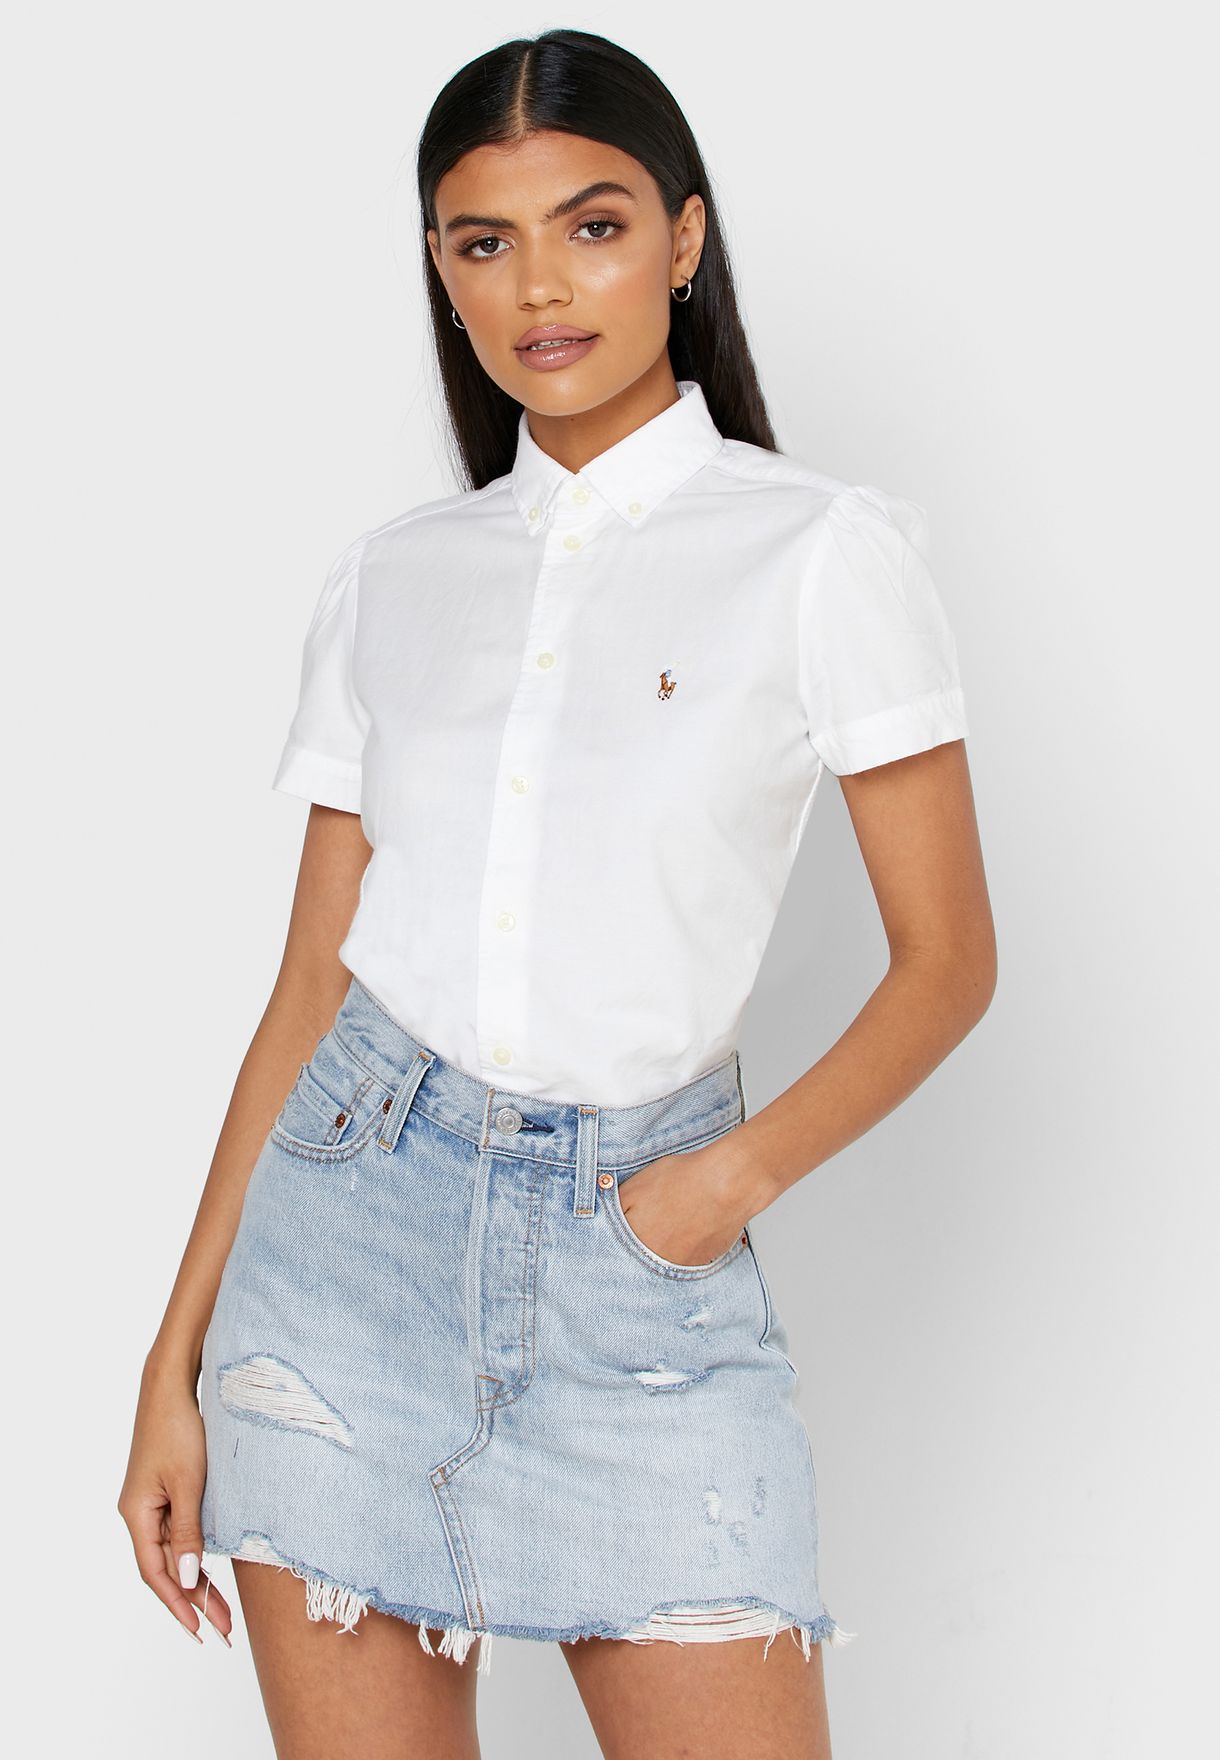 white polo button down shirt women's